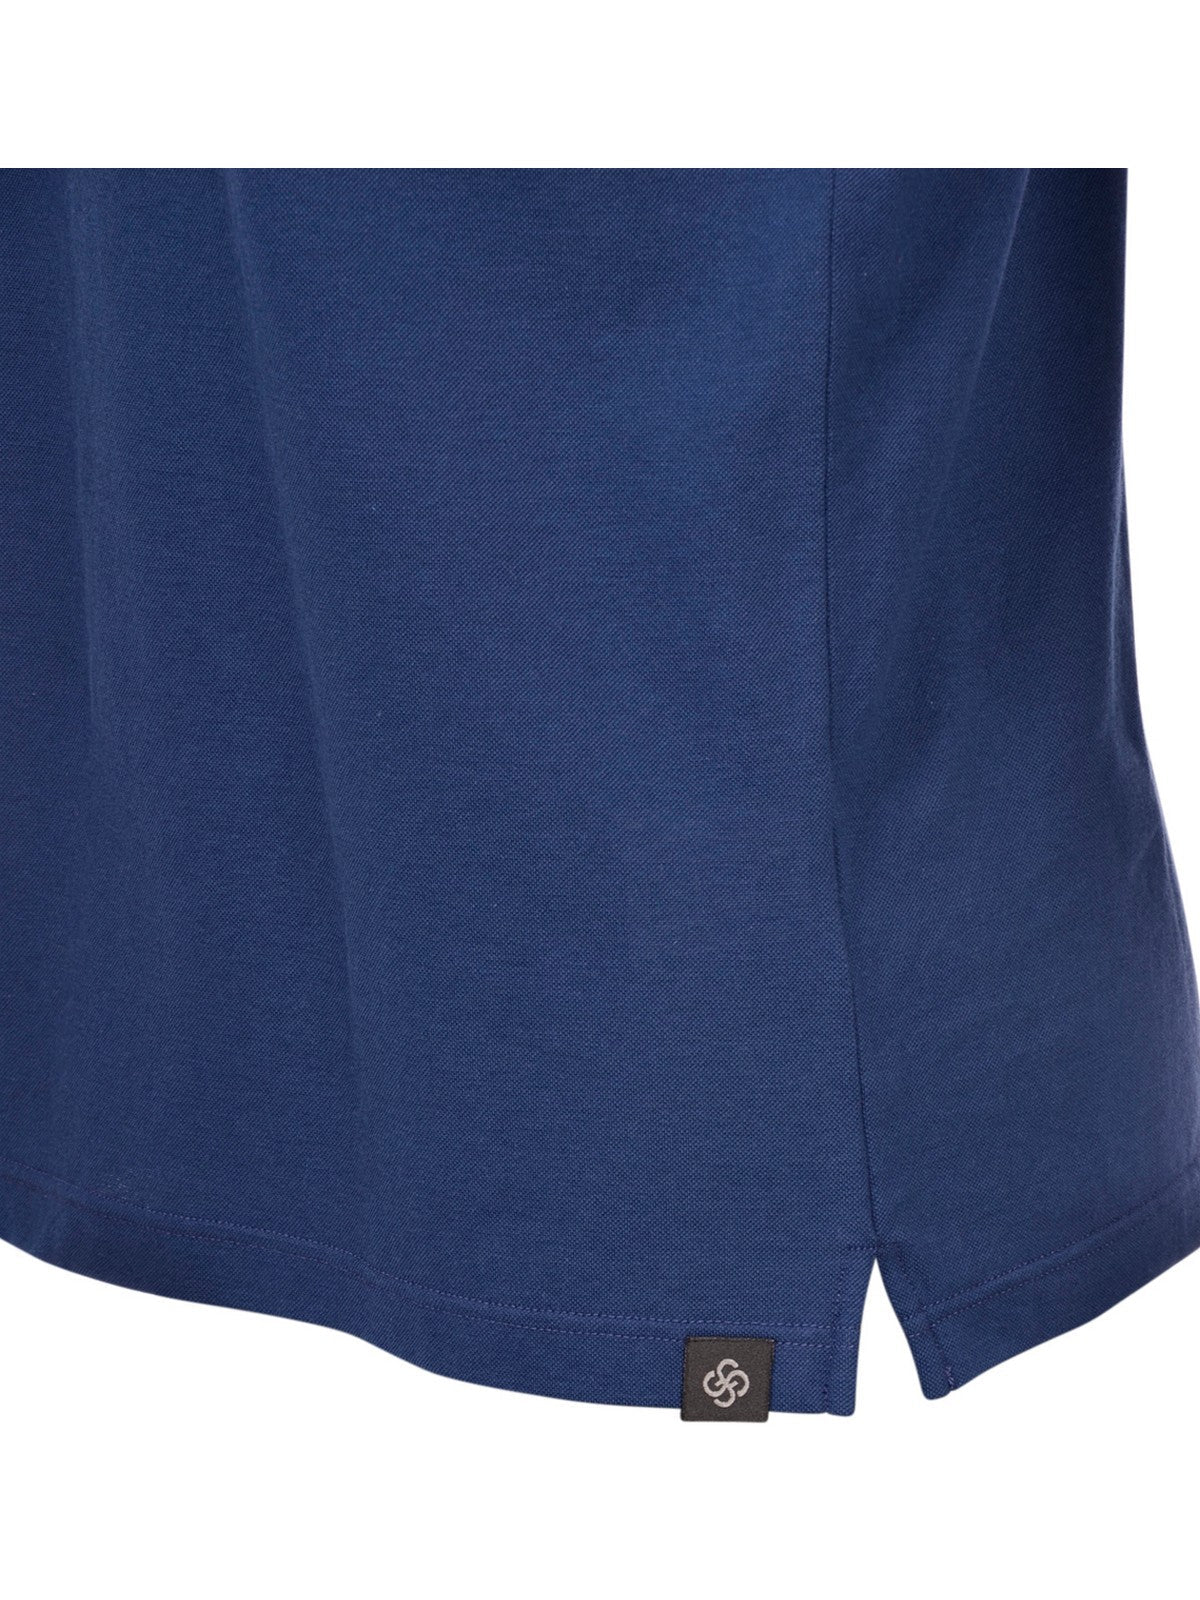 GRAN SASSO T-Shirt et Polo Hommes 60103/81401 590 Bleu